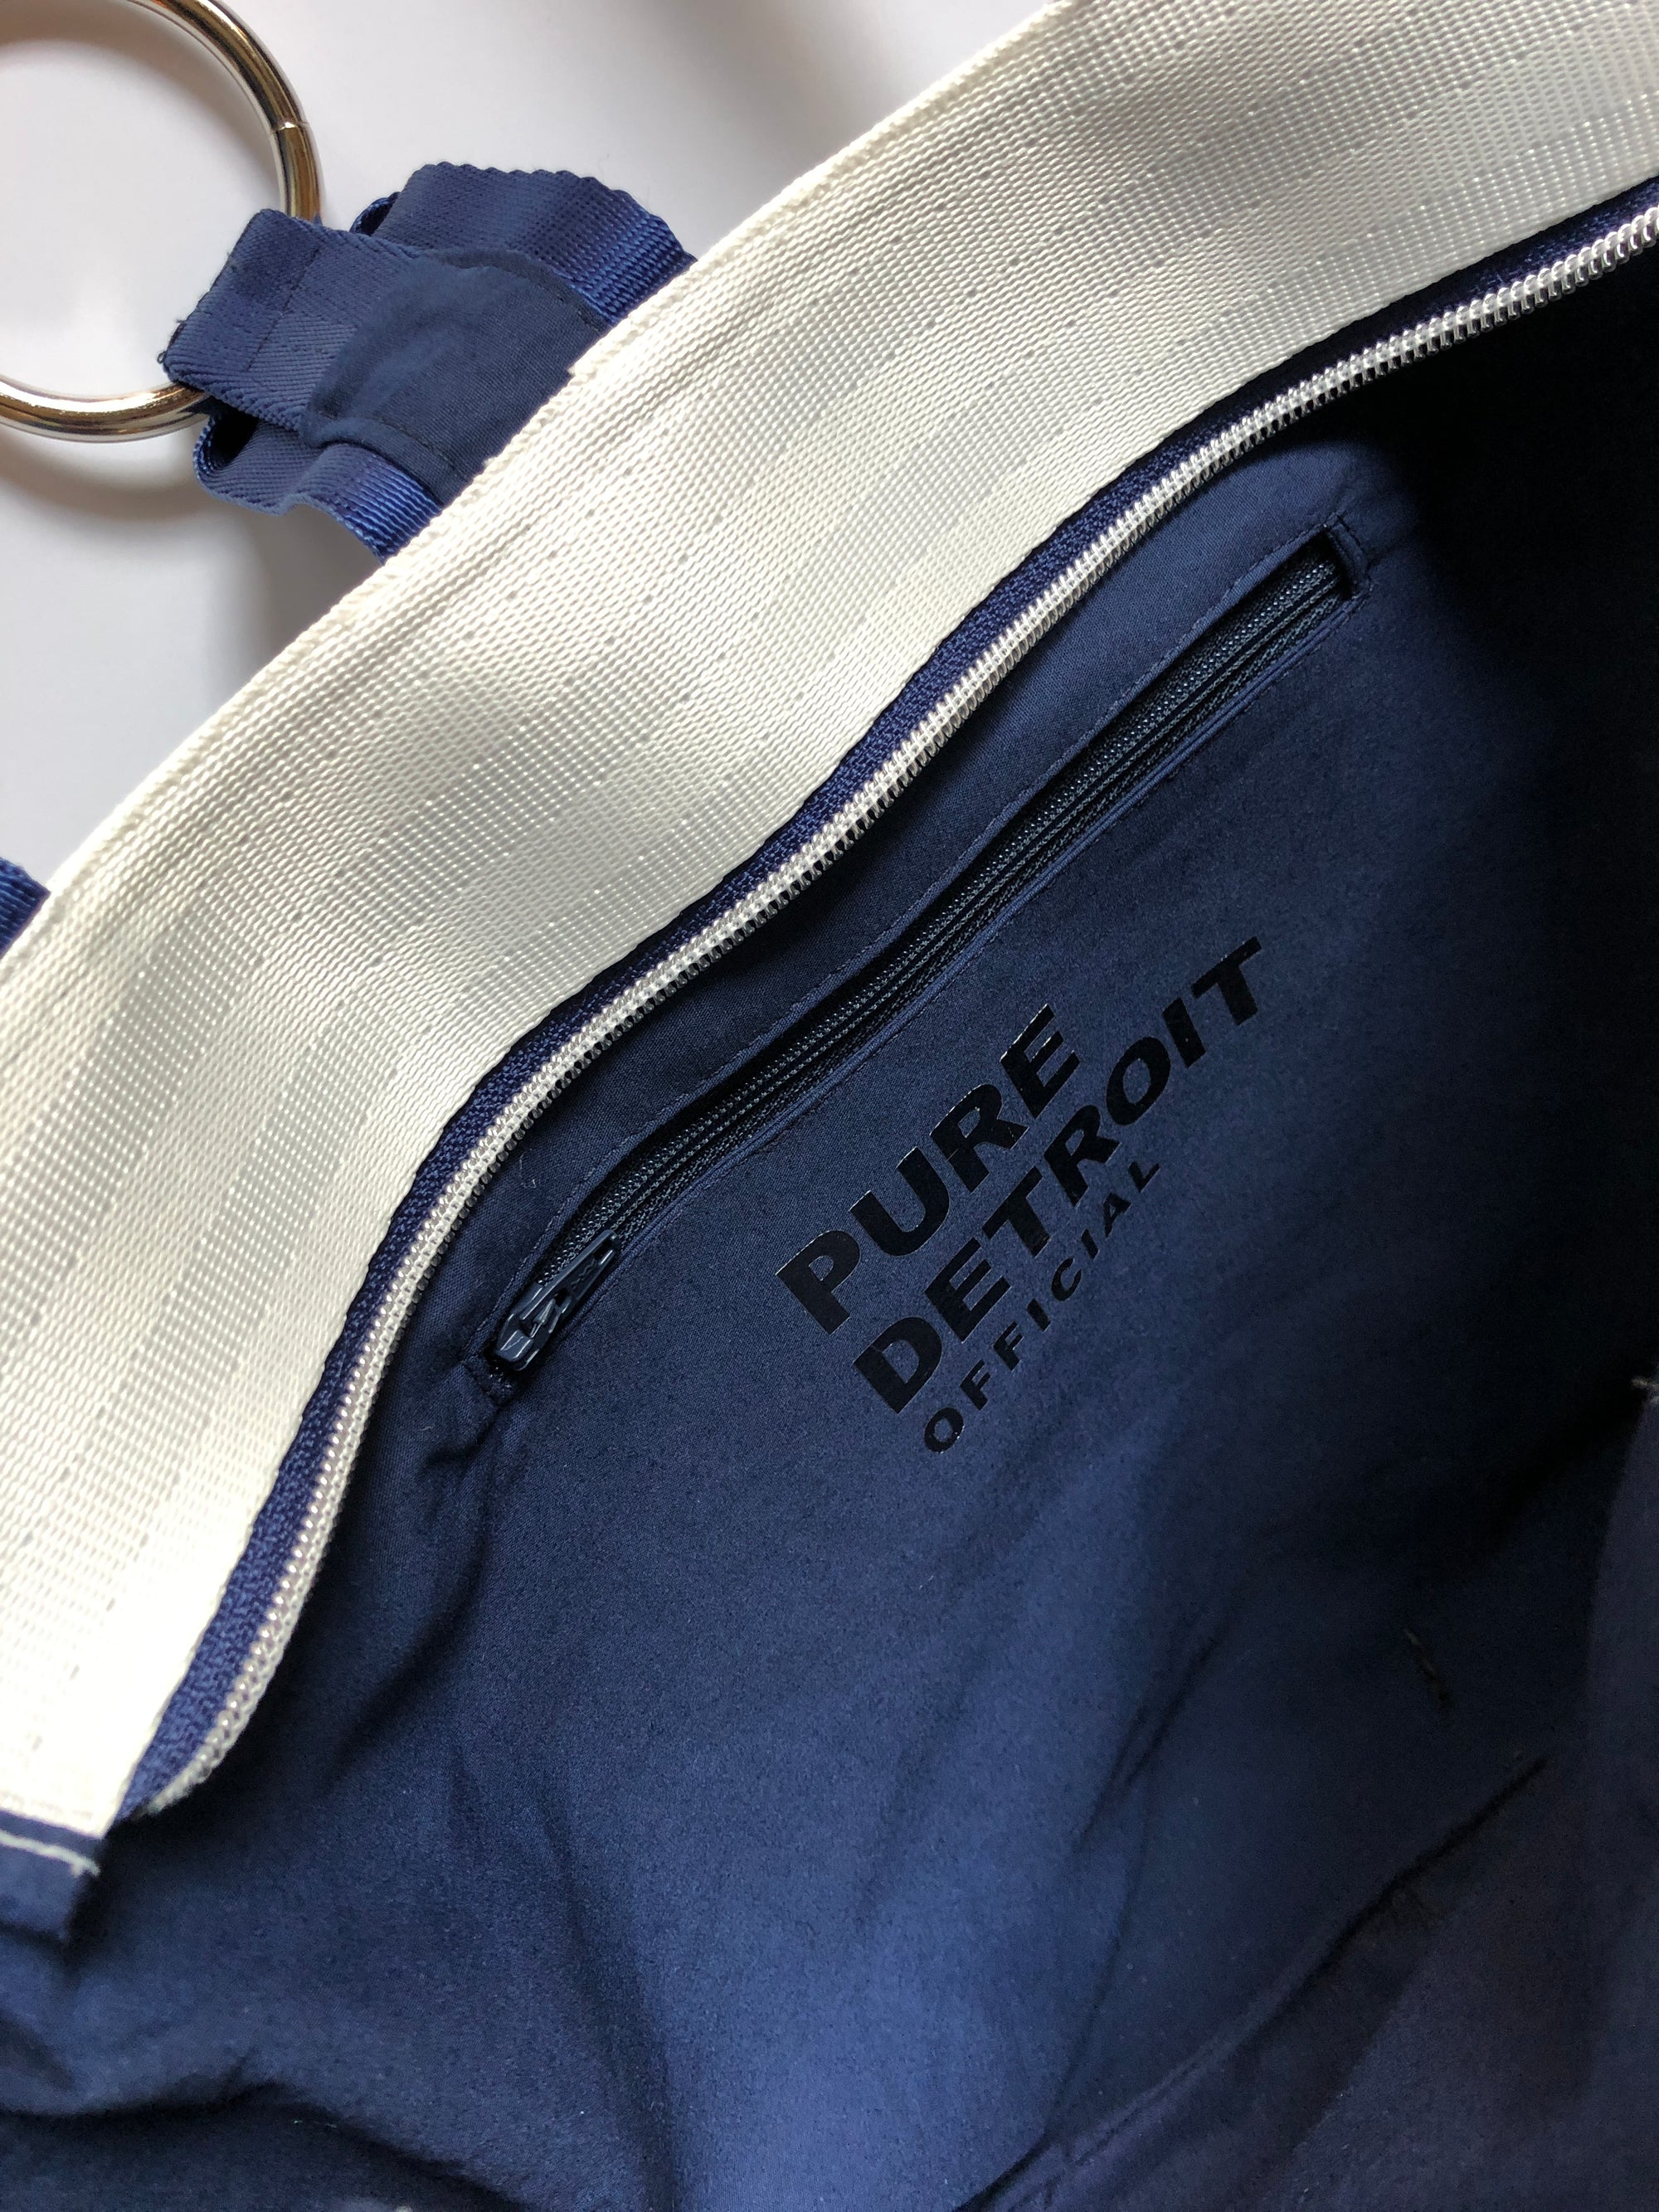 Pure Detroit OFFICIAL - Medium Ring Tote Seatbelt Bag - Belle Isle Spectrum PRE ORDER Seatbelt Bags   